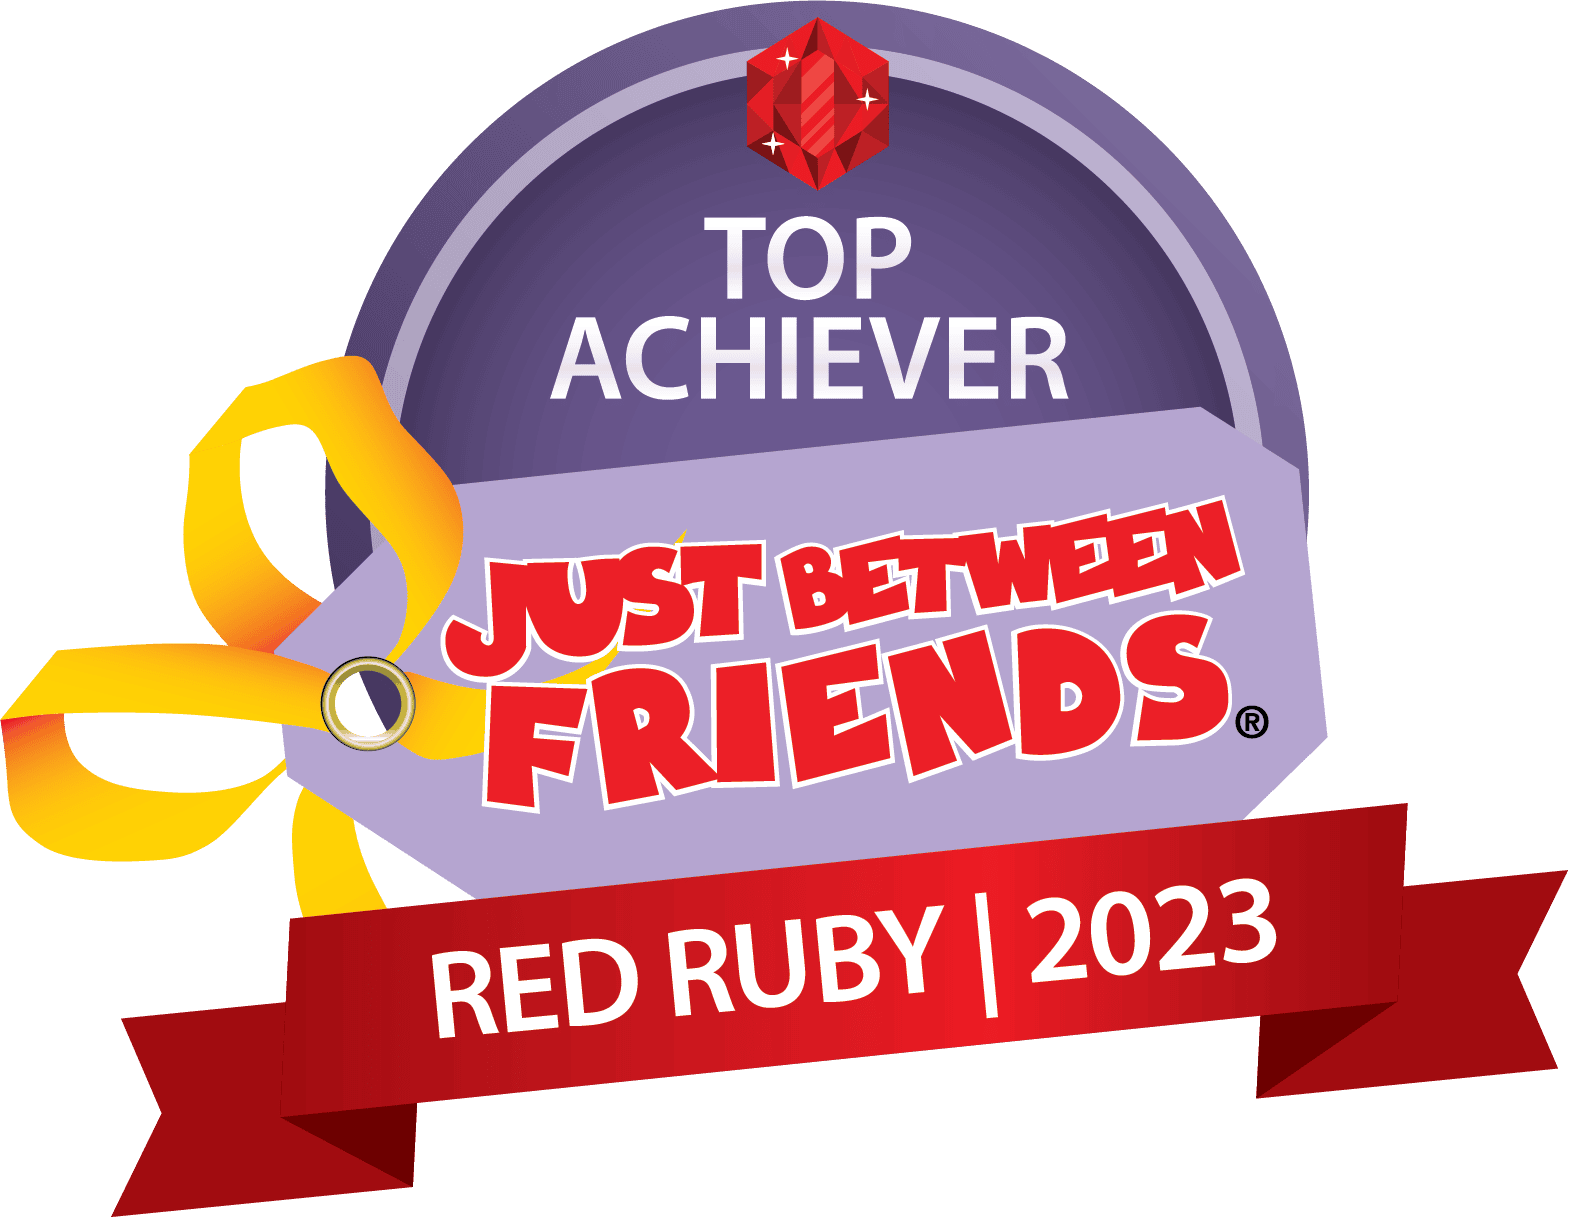 Red Ruby award winner in 2022.